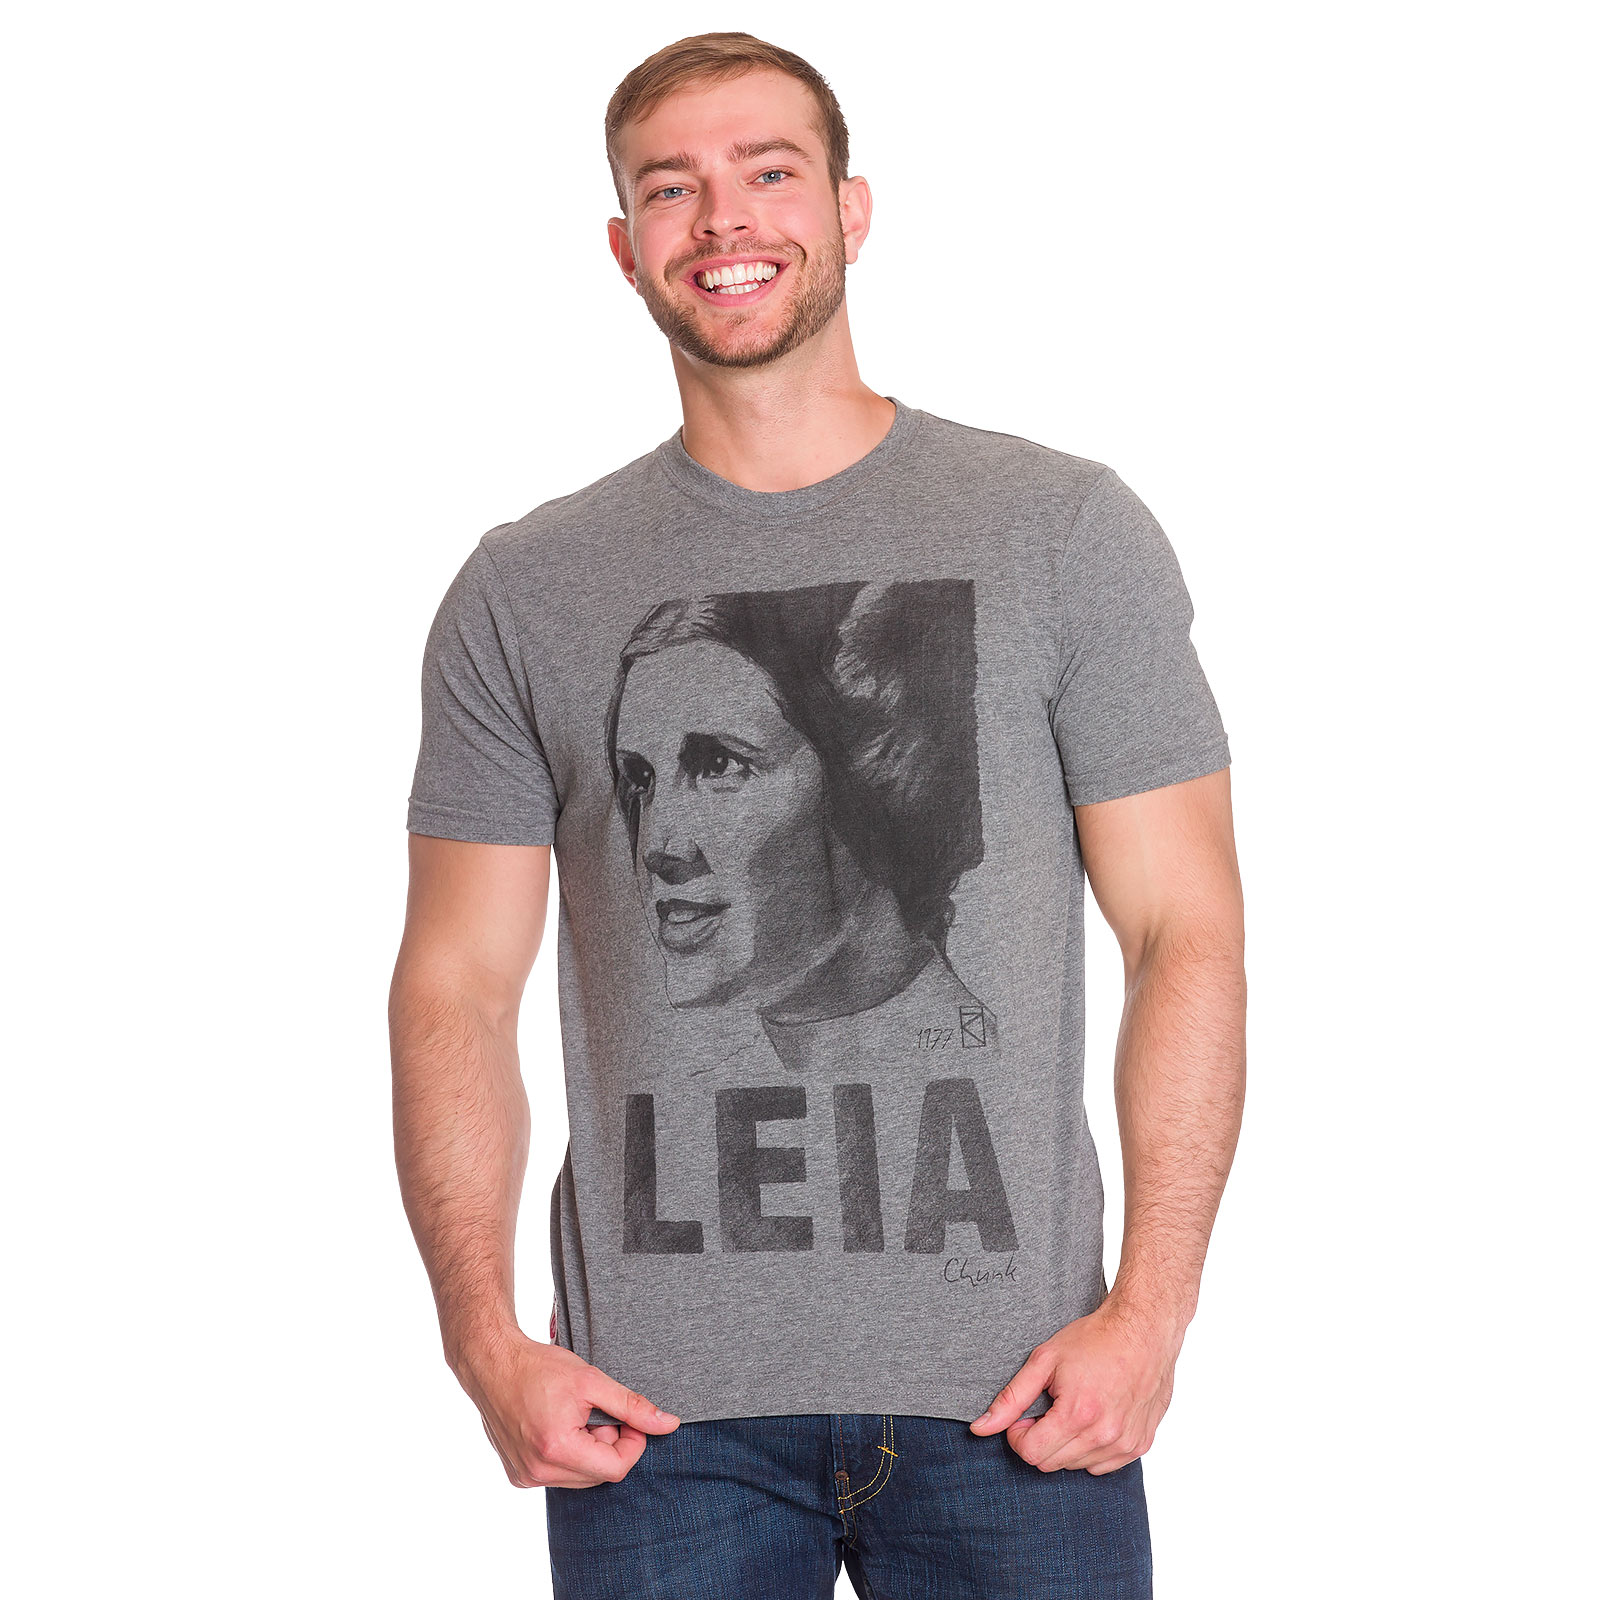 Star Wars - T-shirt Leia Sketch gris